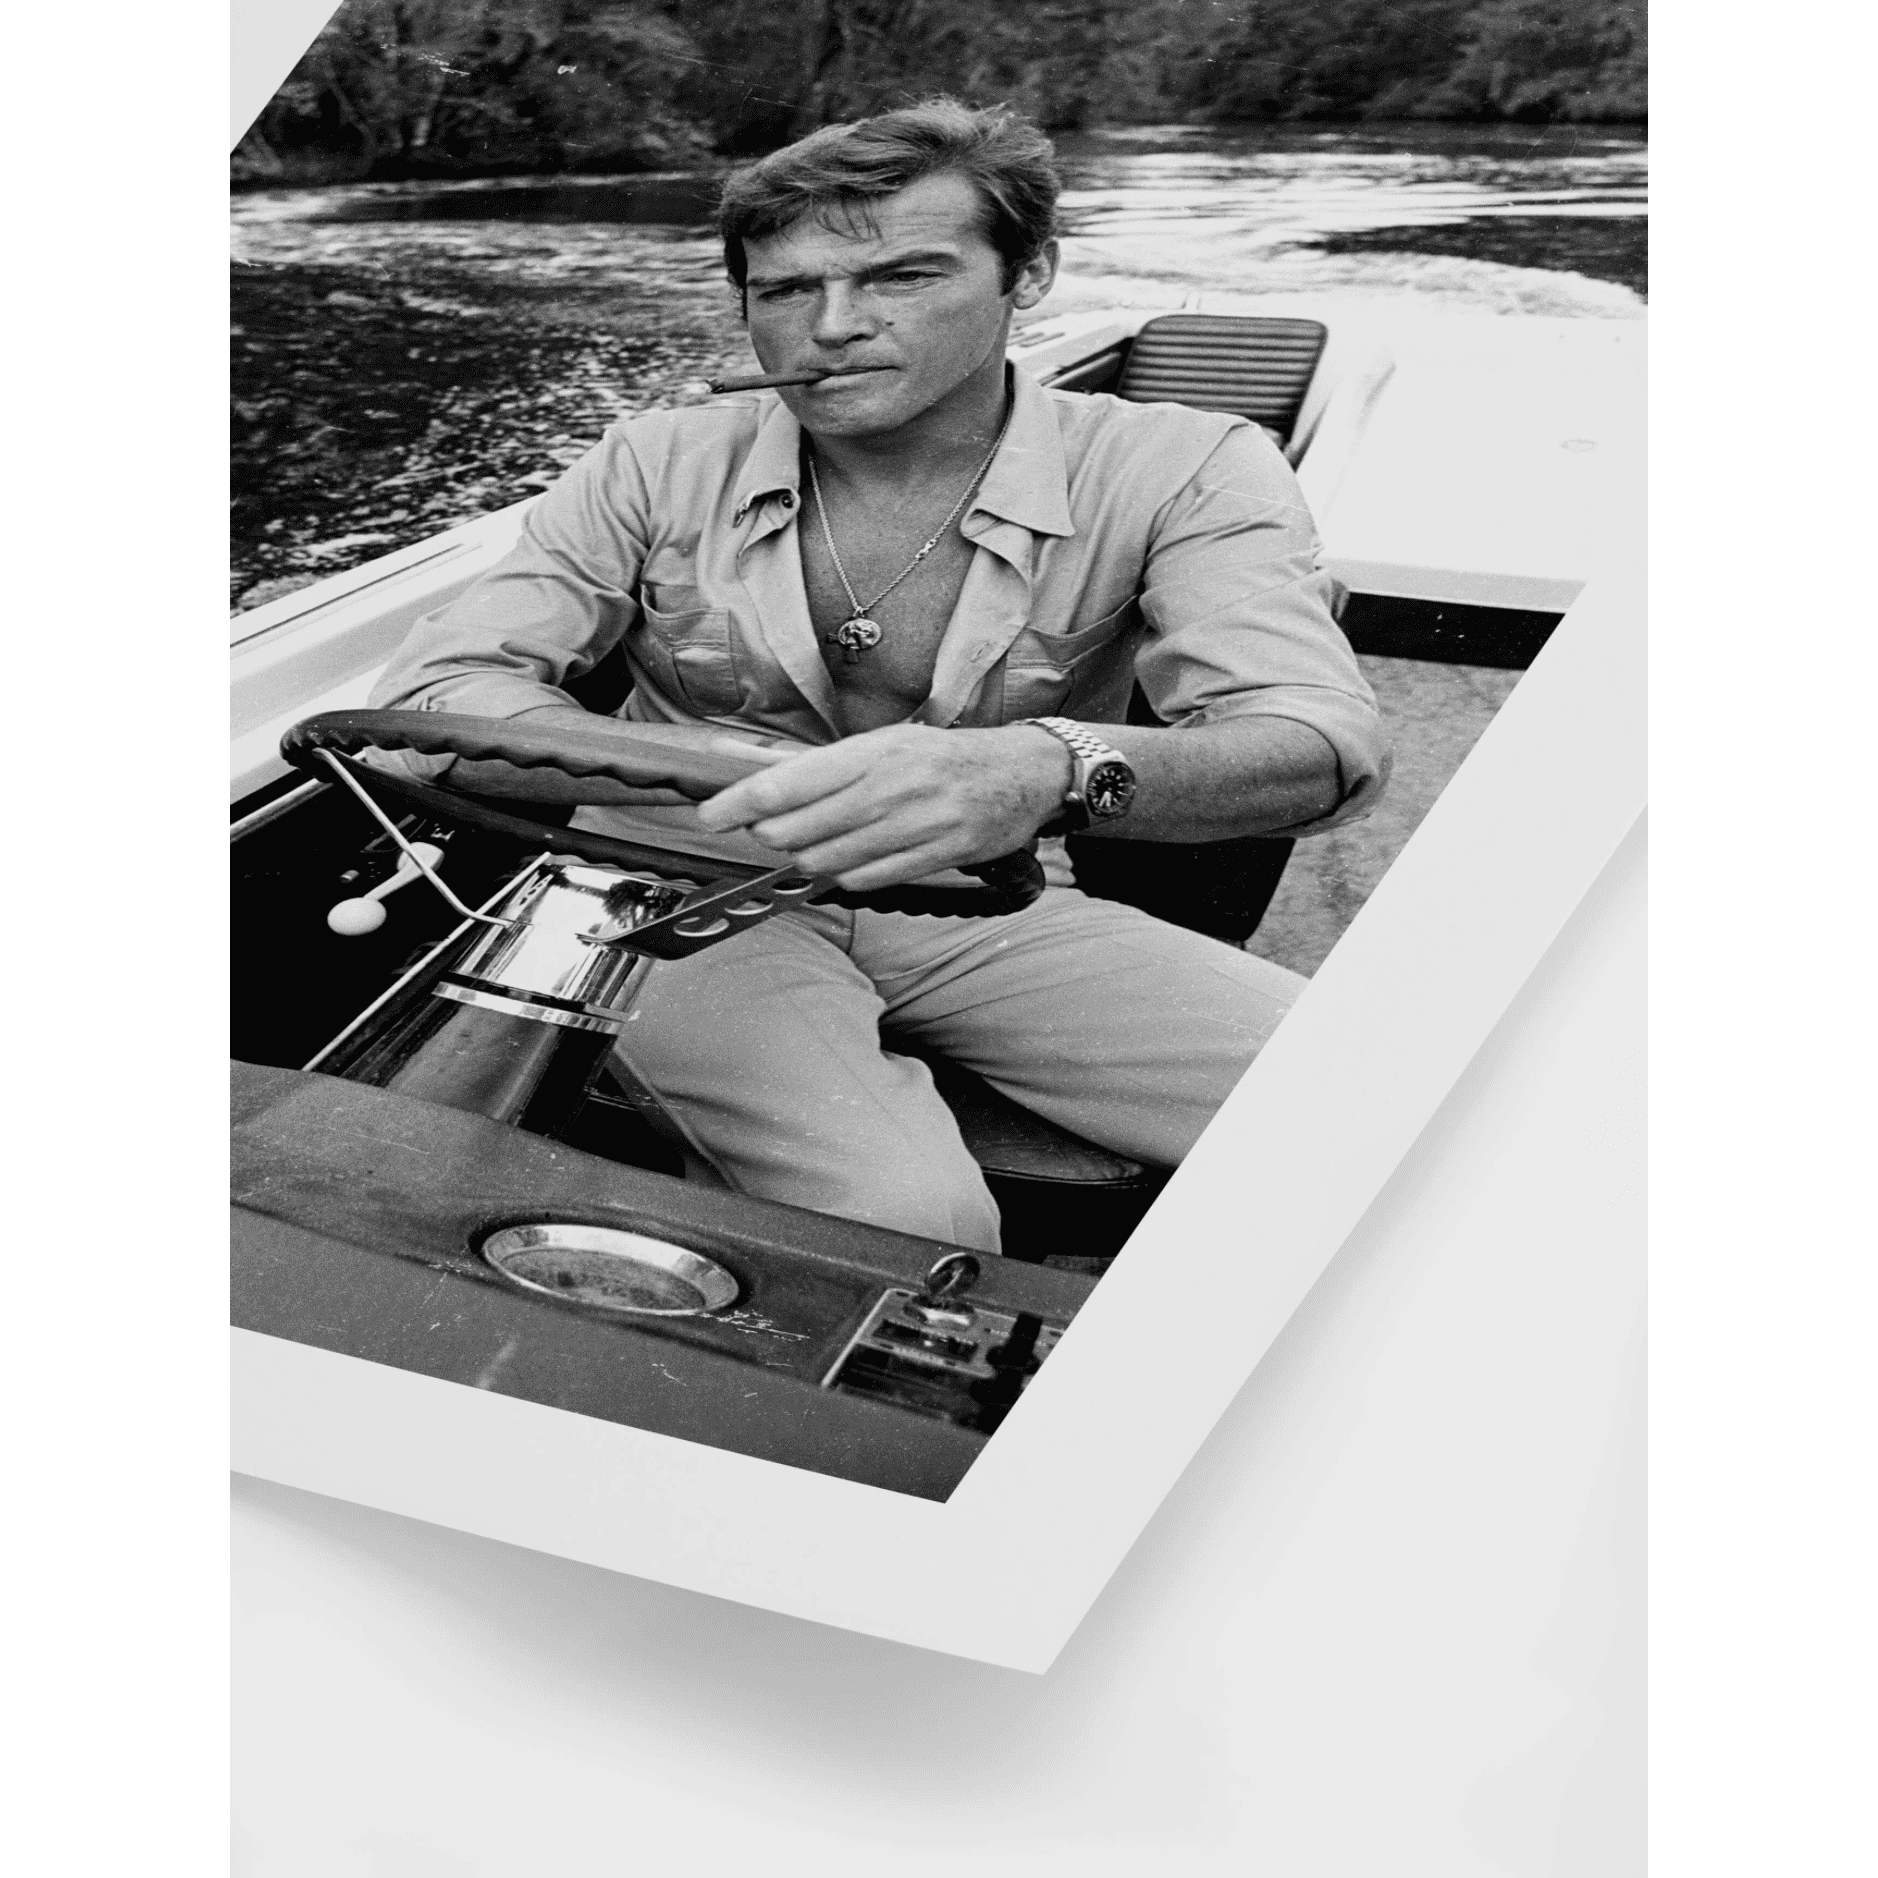 James Bond, Boat Black and White Poster